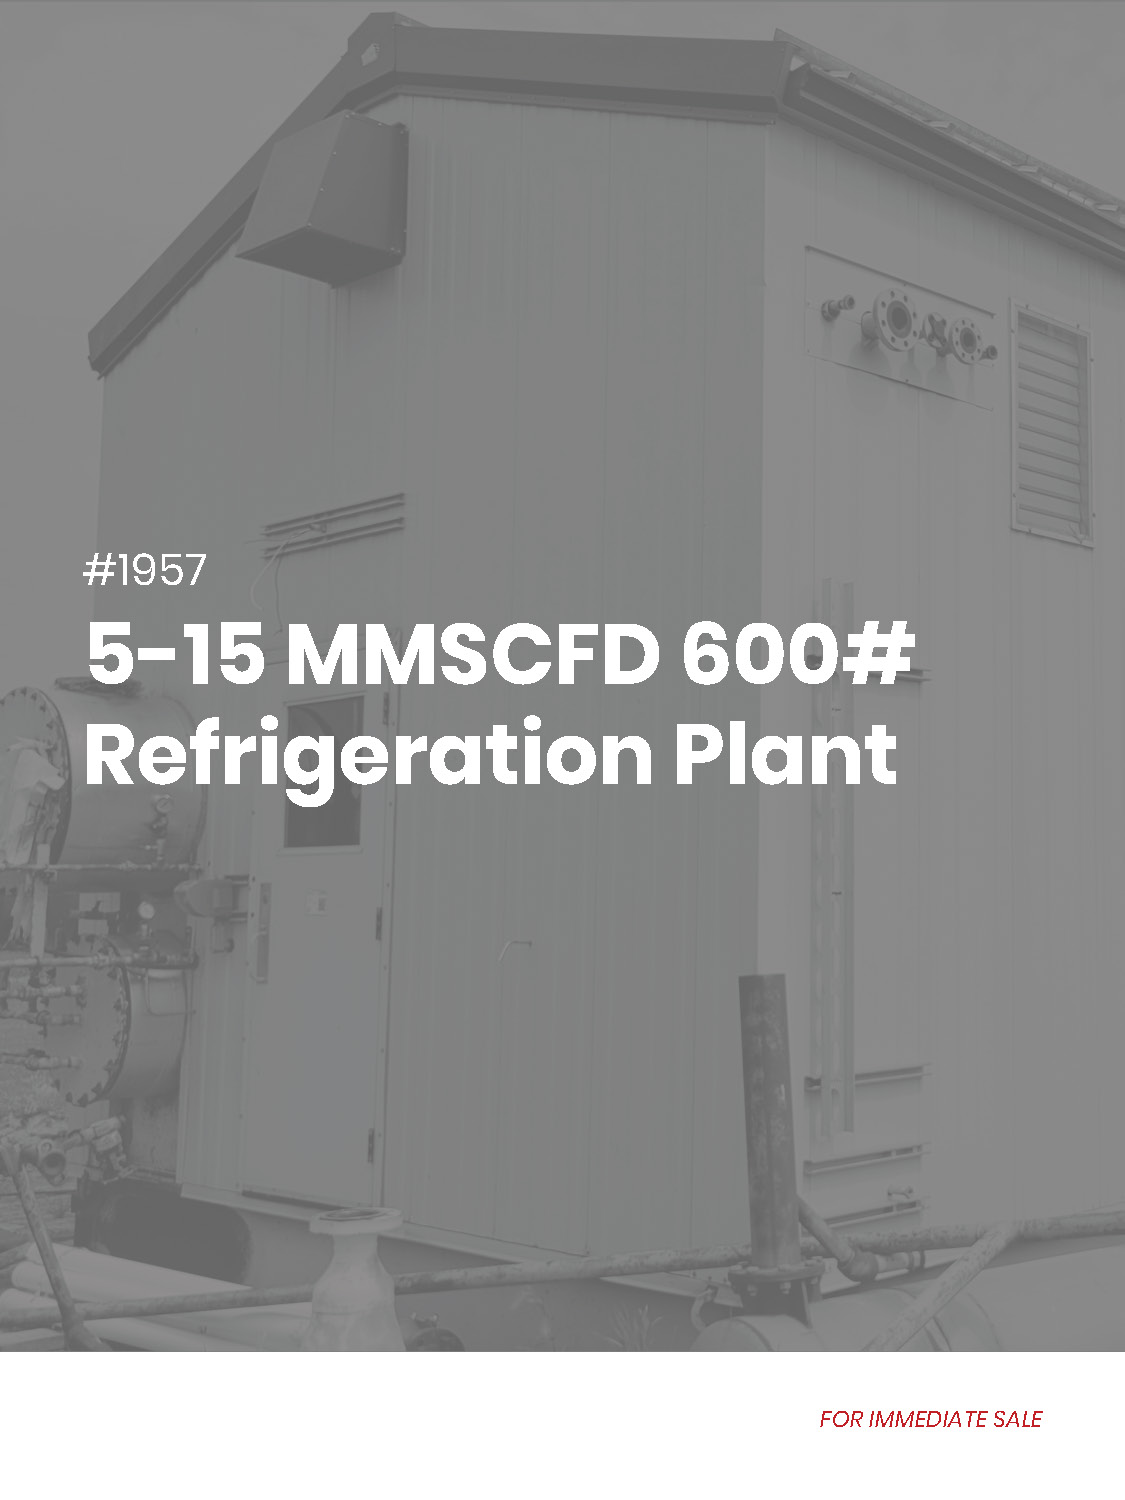 5MMSCFD 15MMSCFD 12 15 MMSCFD Gas Refridge Refrigeration Plant for Sale in Alberta Canada